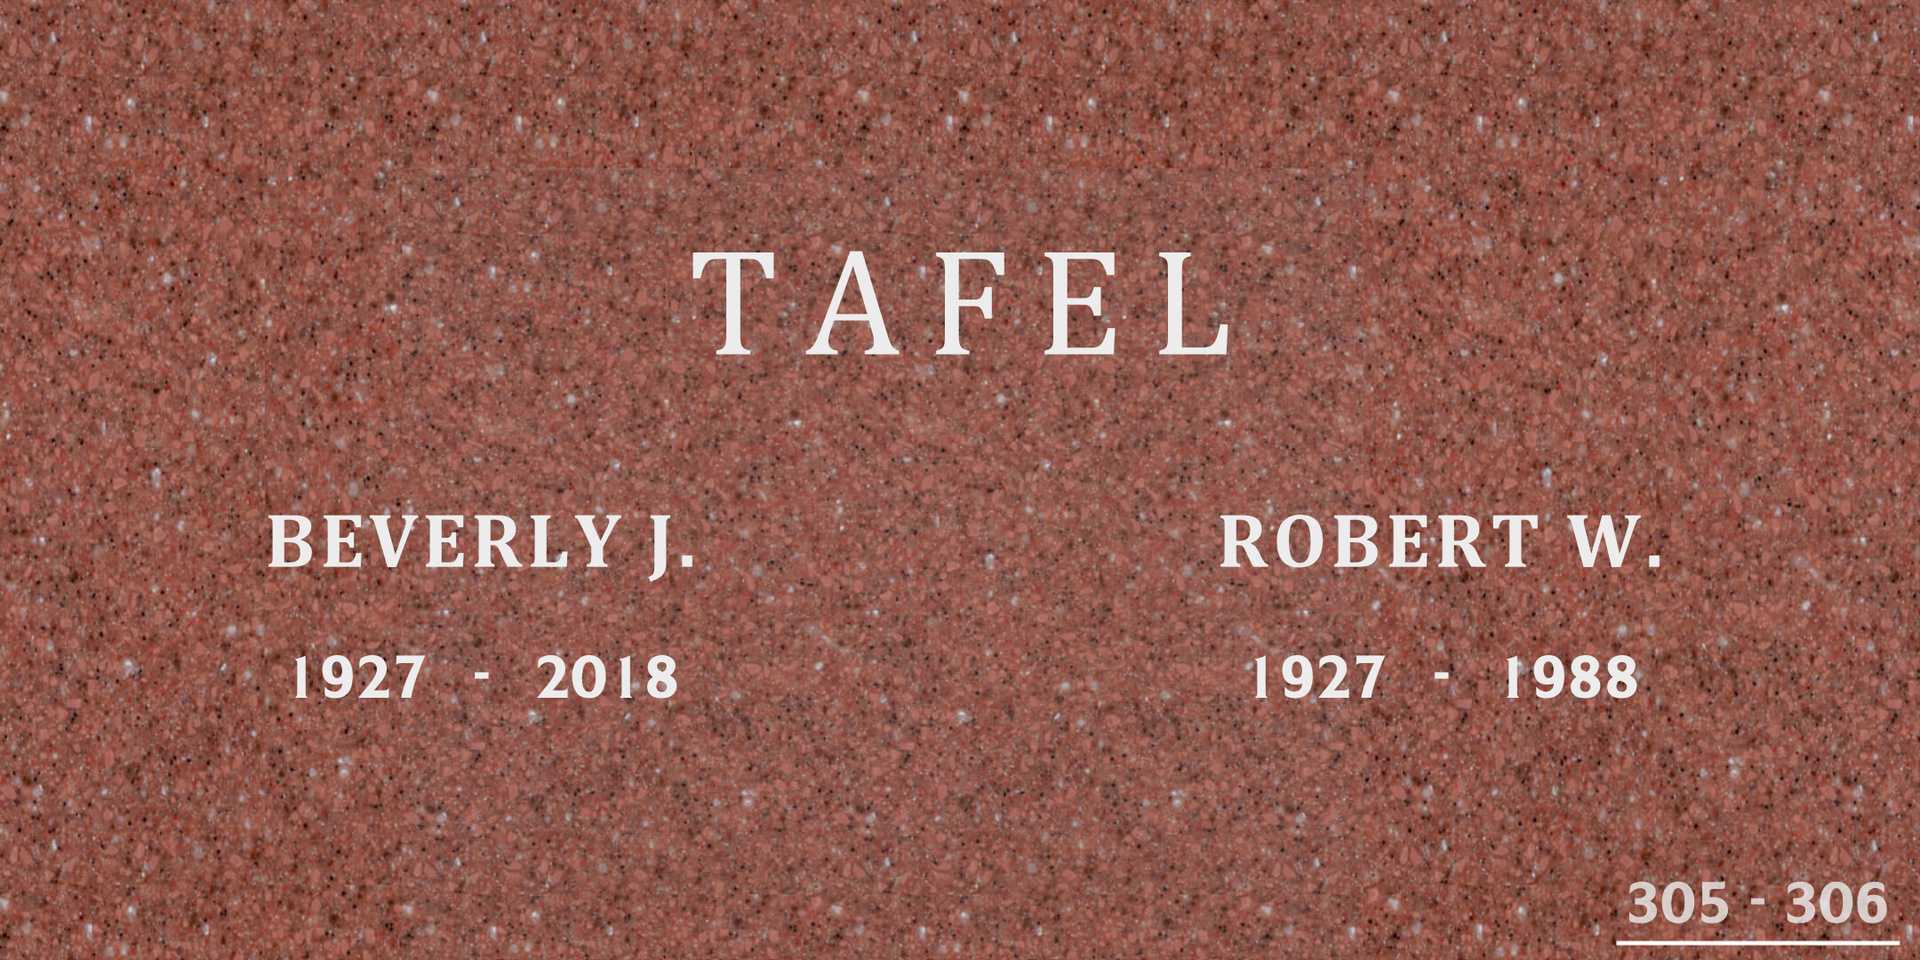 Beverly J. Tafel's grave